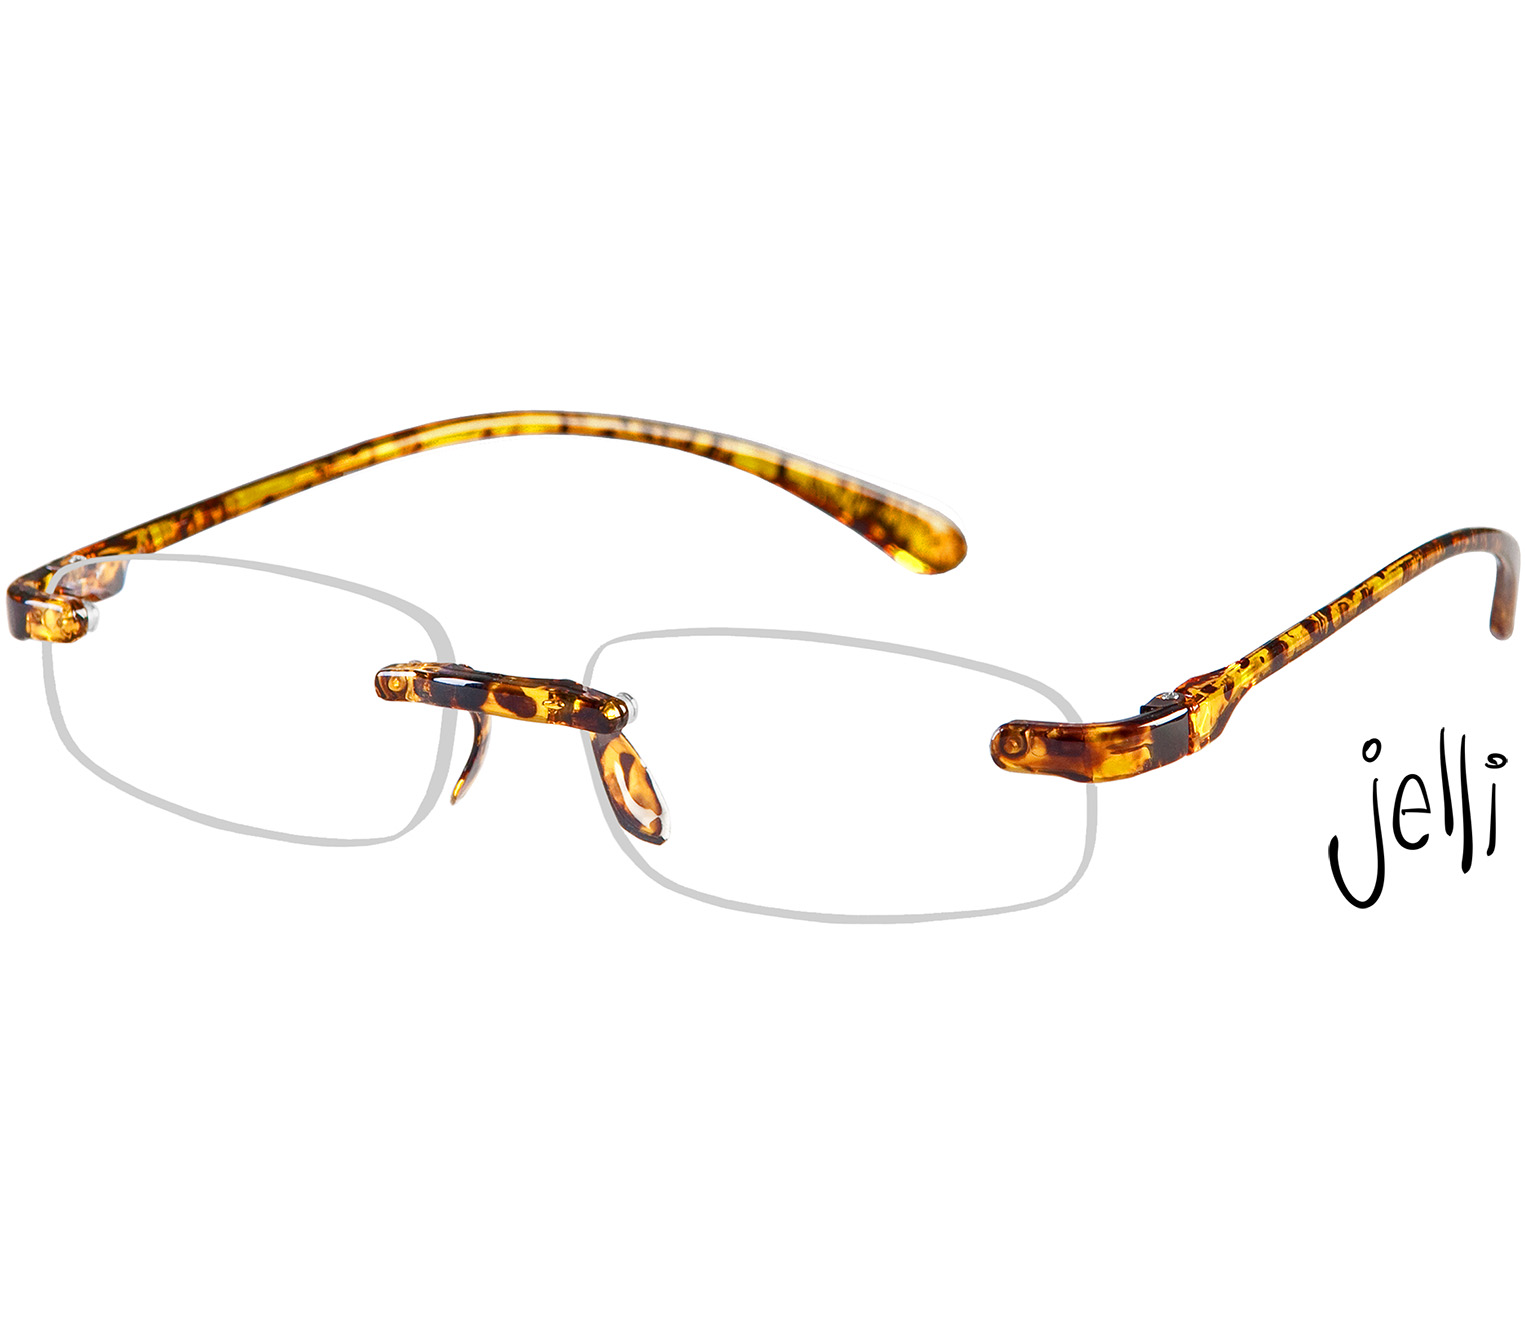 Main Image (Angle) - Jelli (Tortoiseshell) Reading Glasses